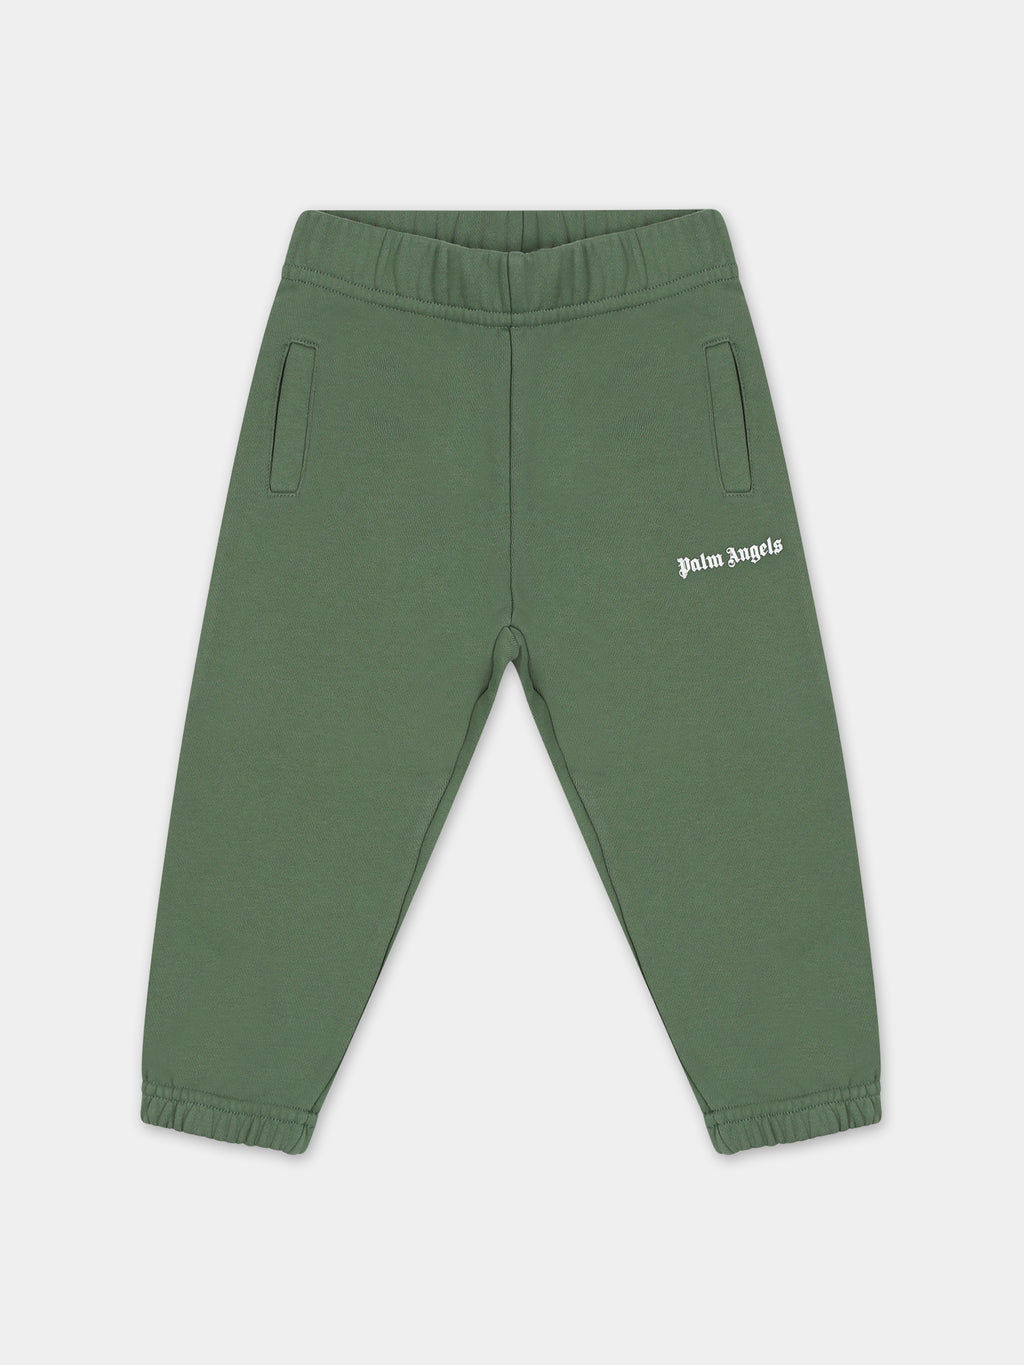 Pantaloni verdi per neonati con logo